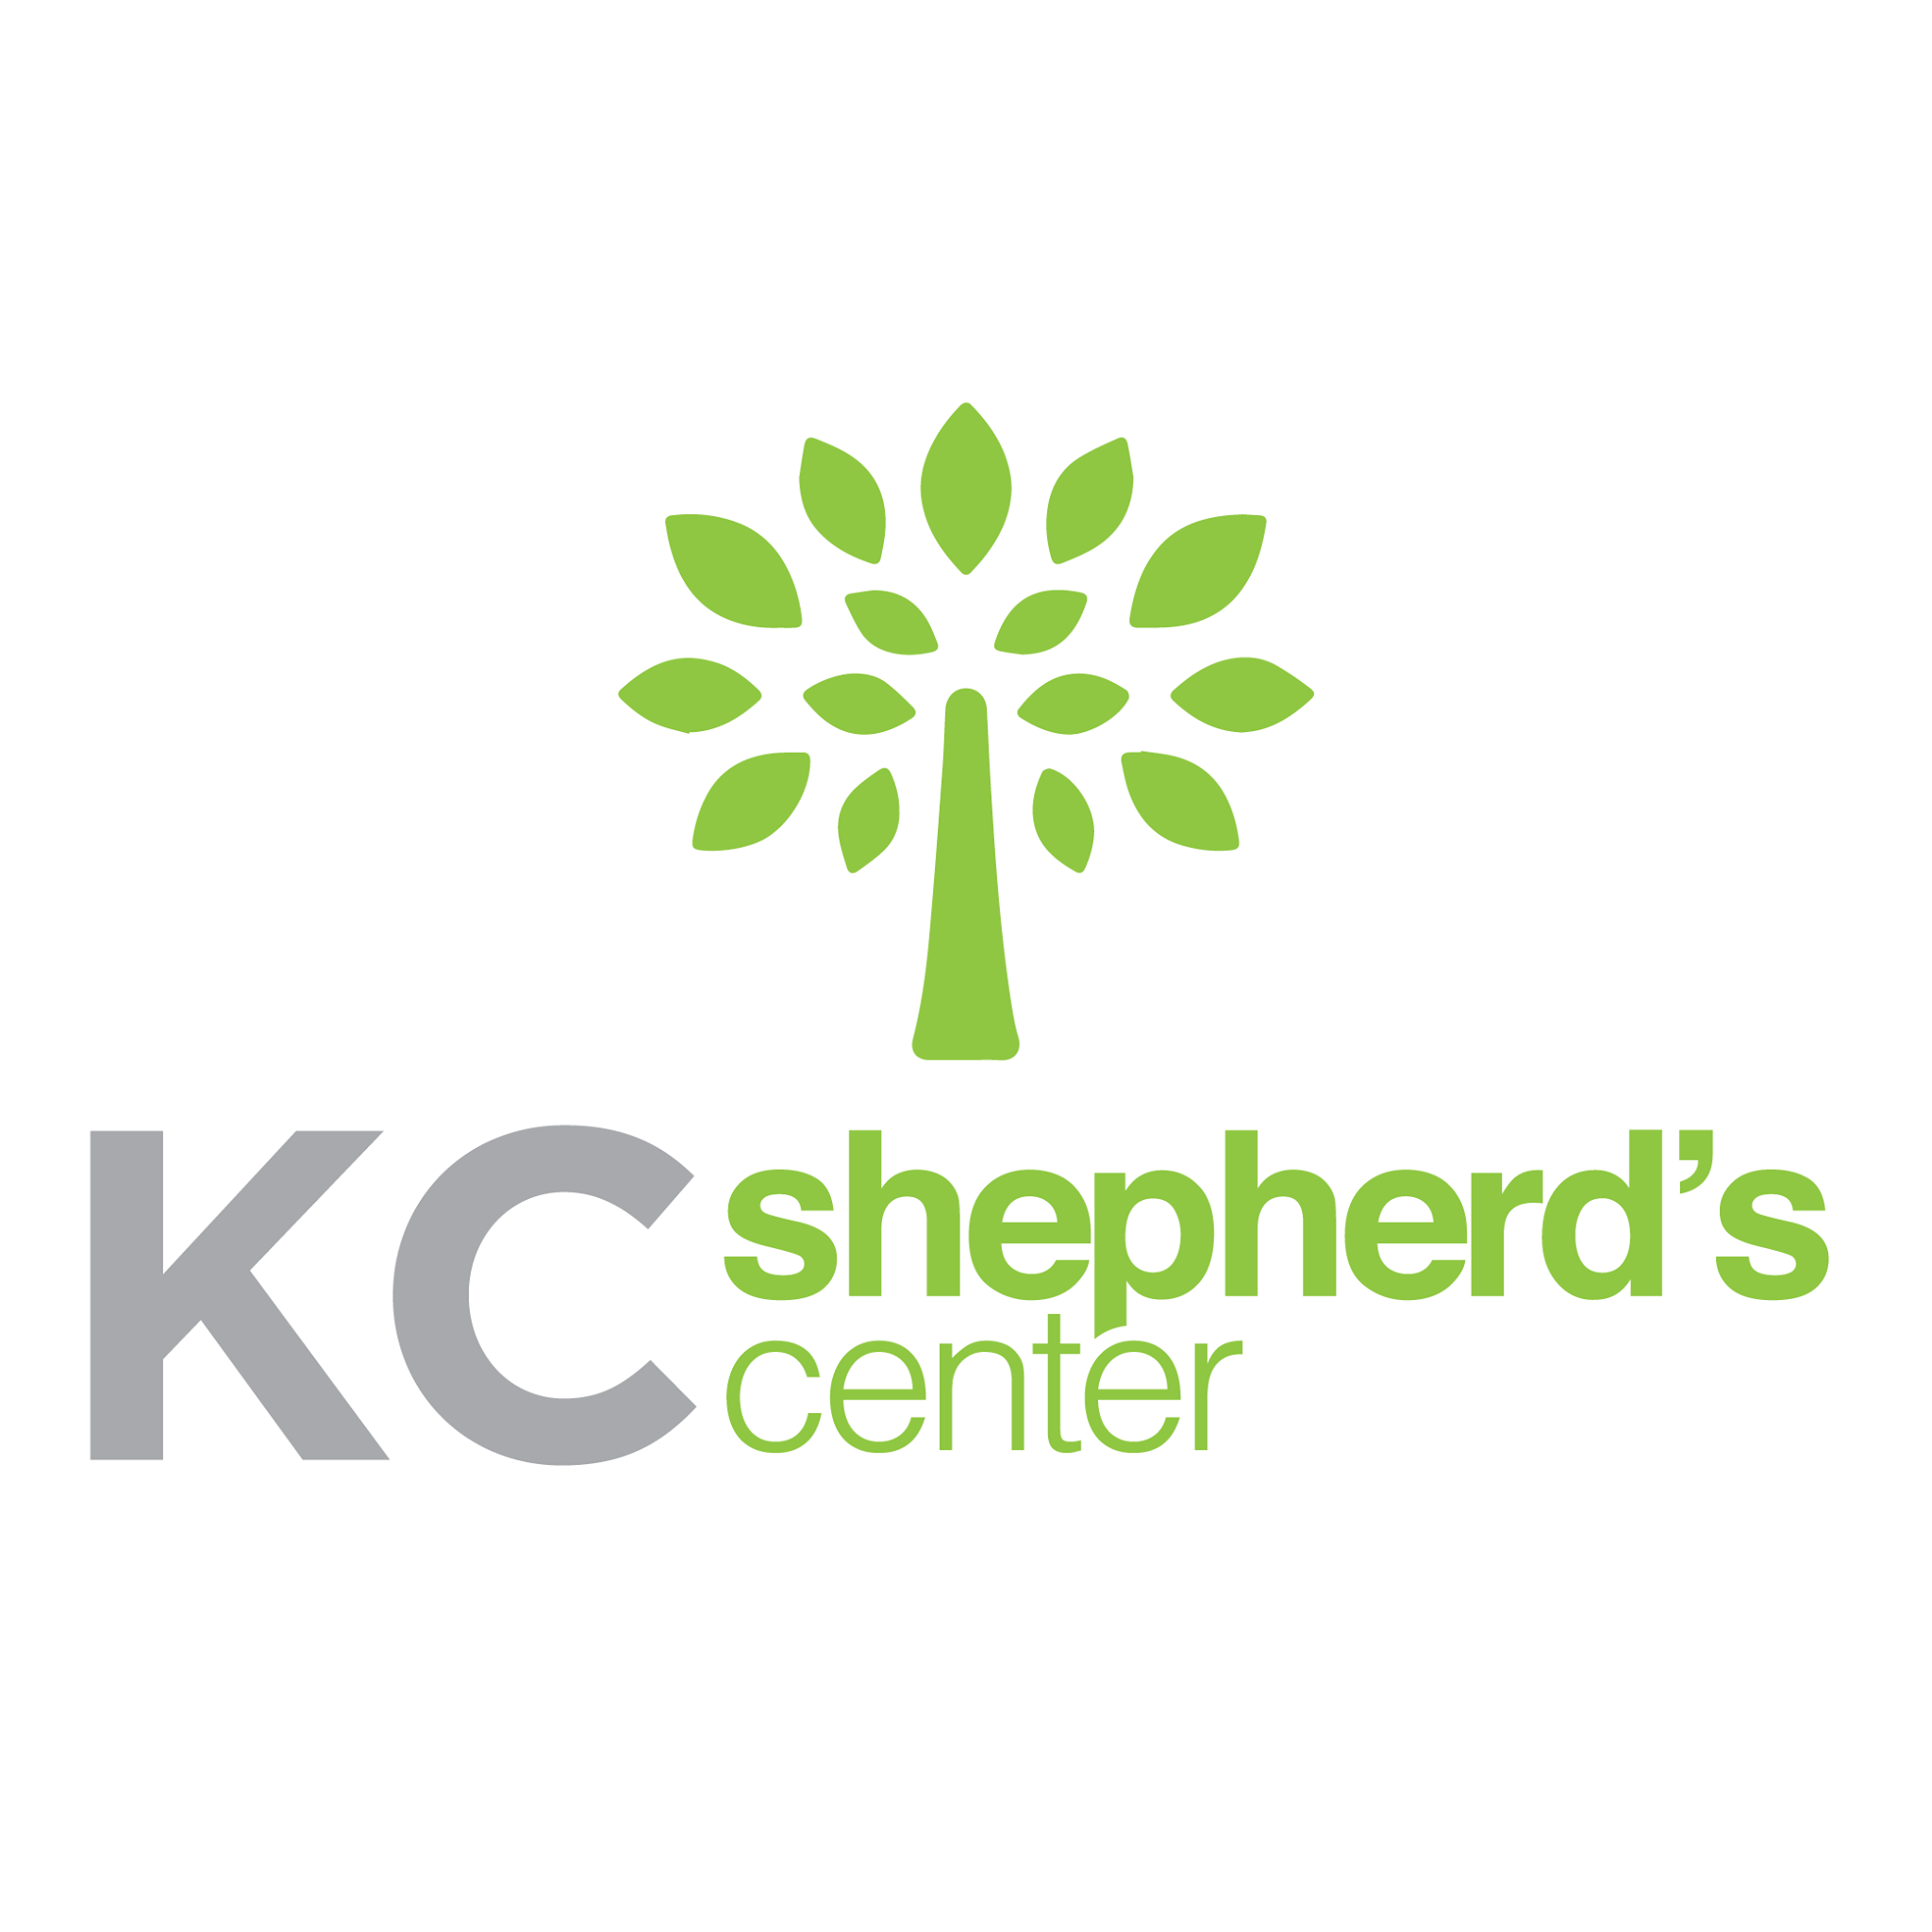 kc shepherd's center.png